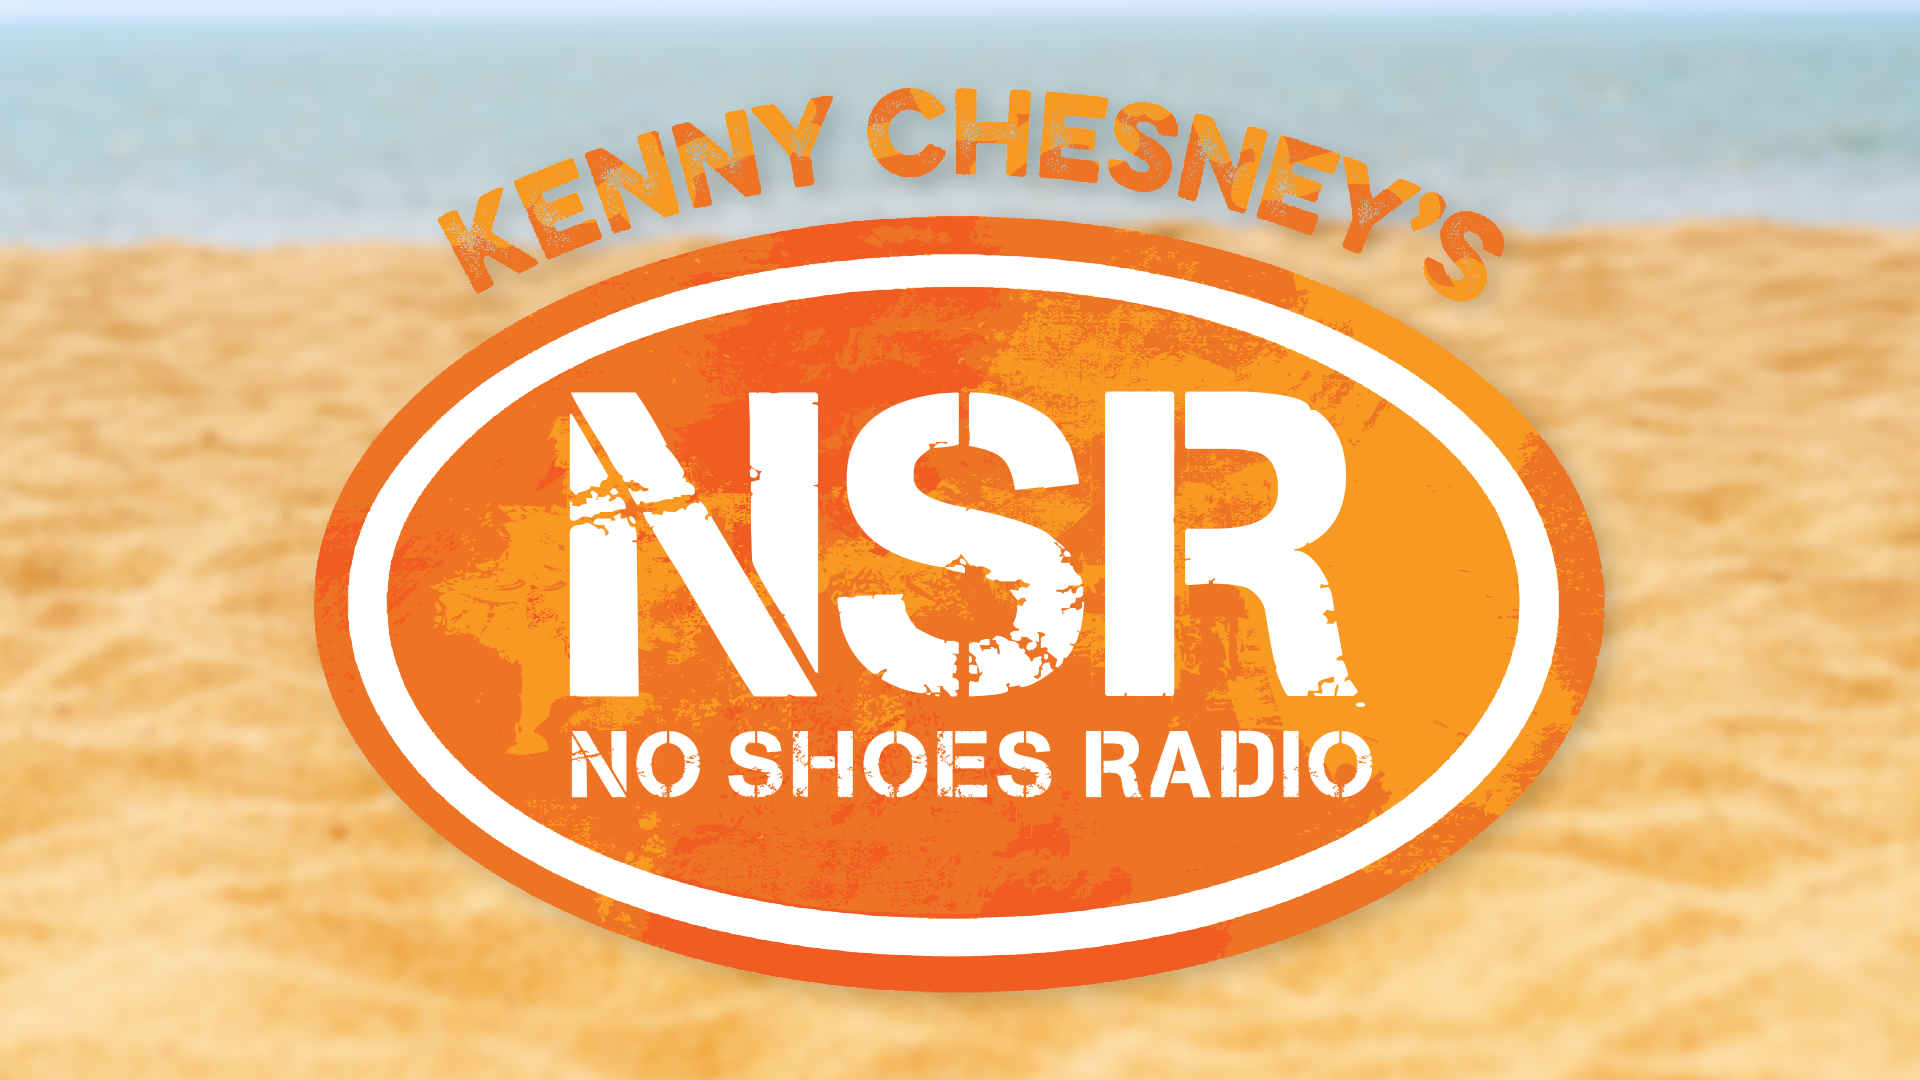 Kenny Chesney's No Shoes Radio